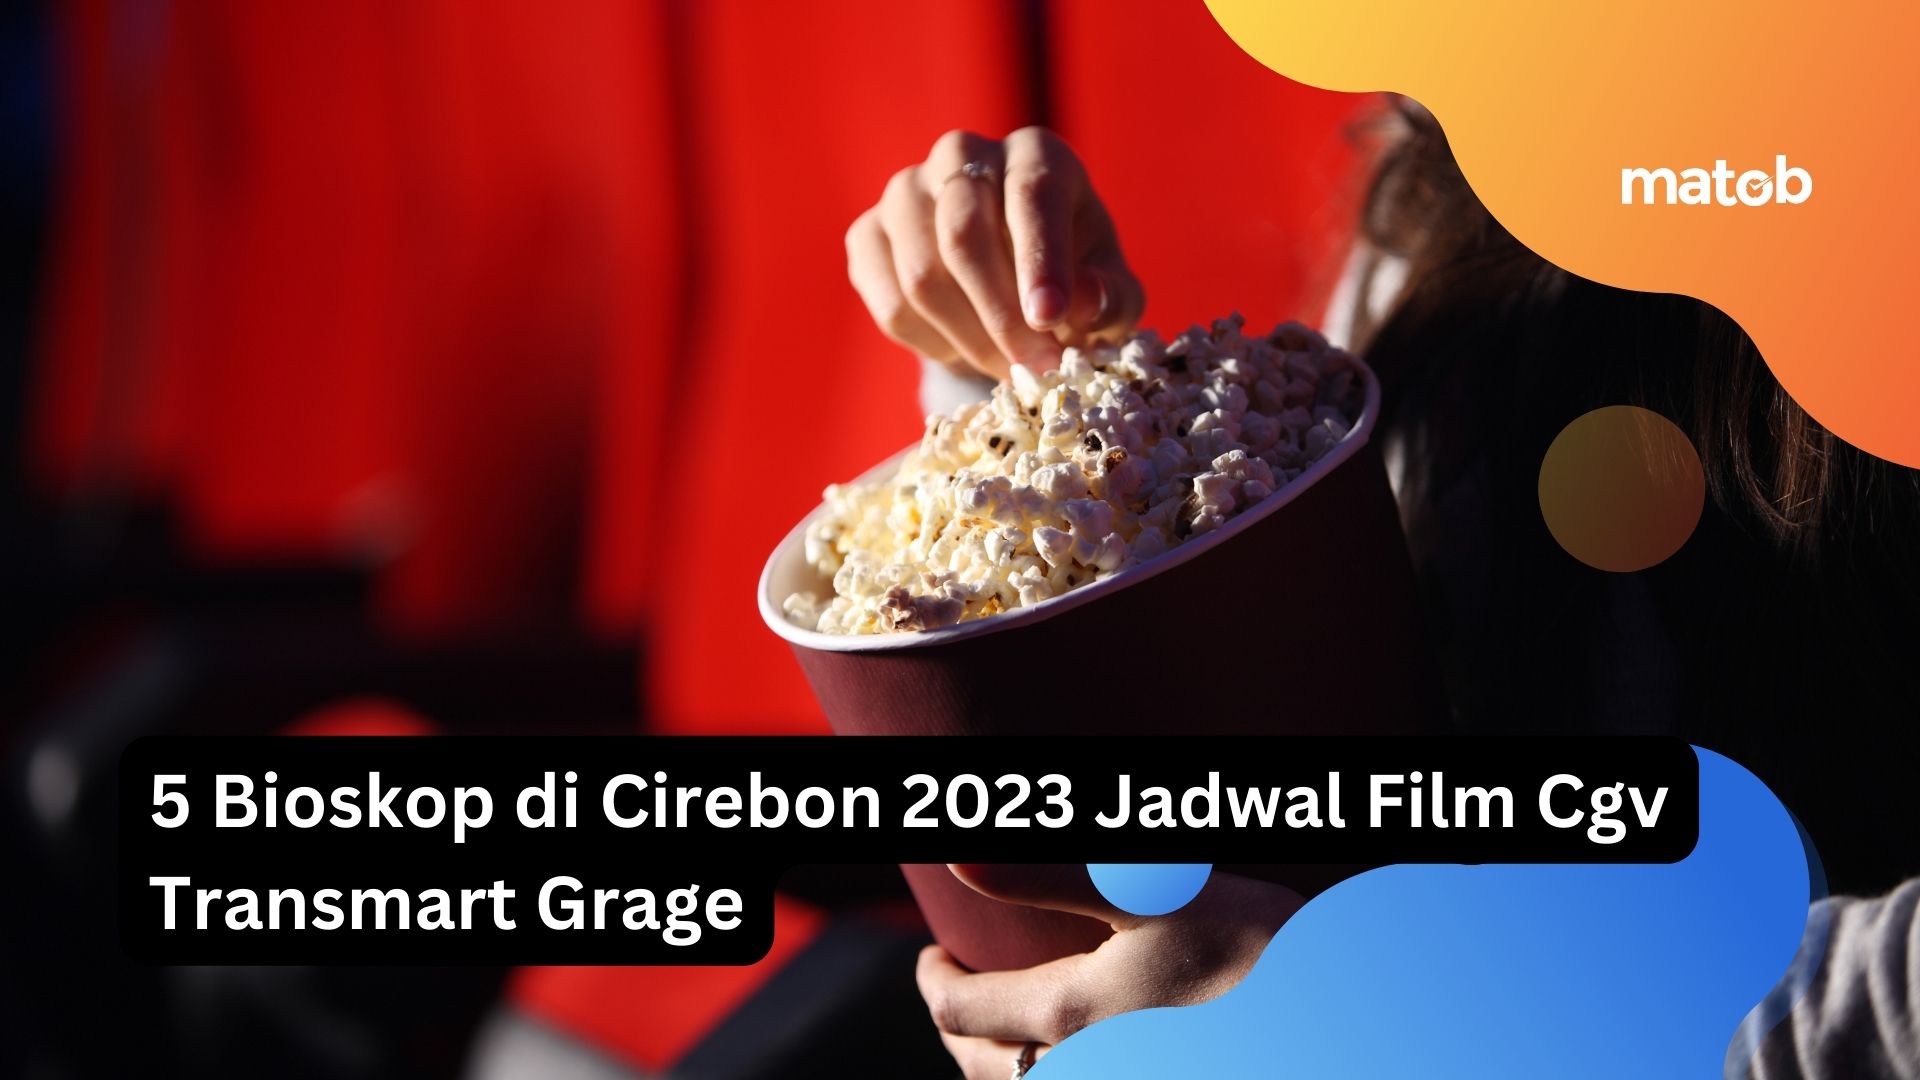 5 Bioskop di Cirebon 2023 Jadwal Film Cgv Transmart Grage